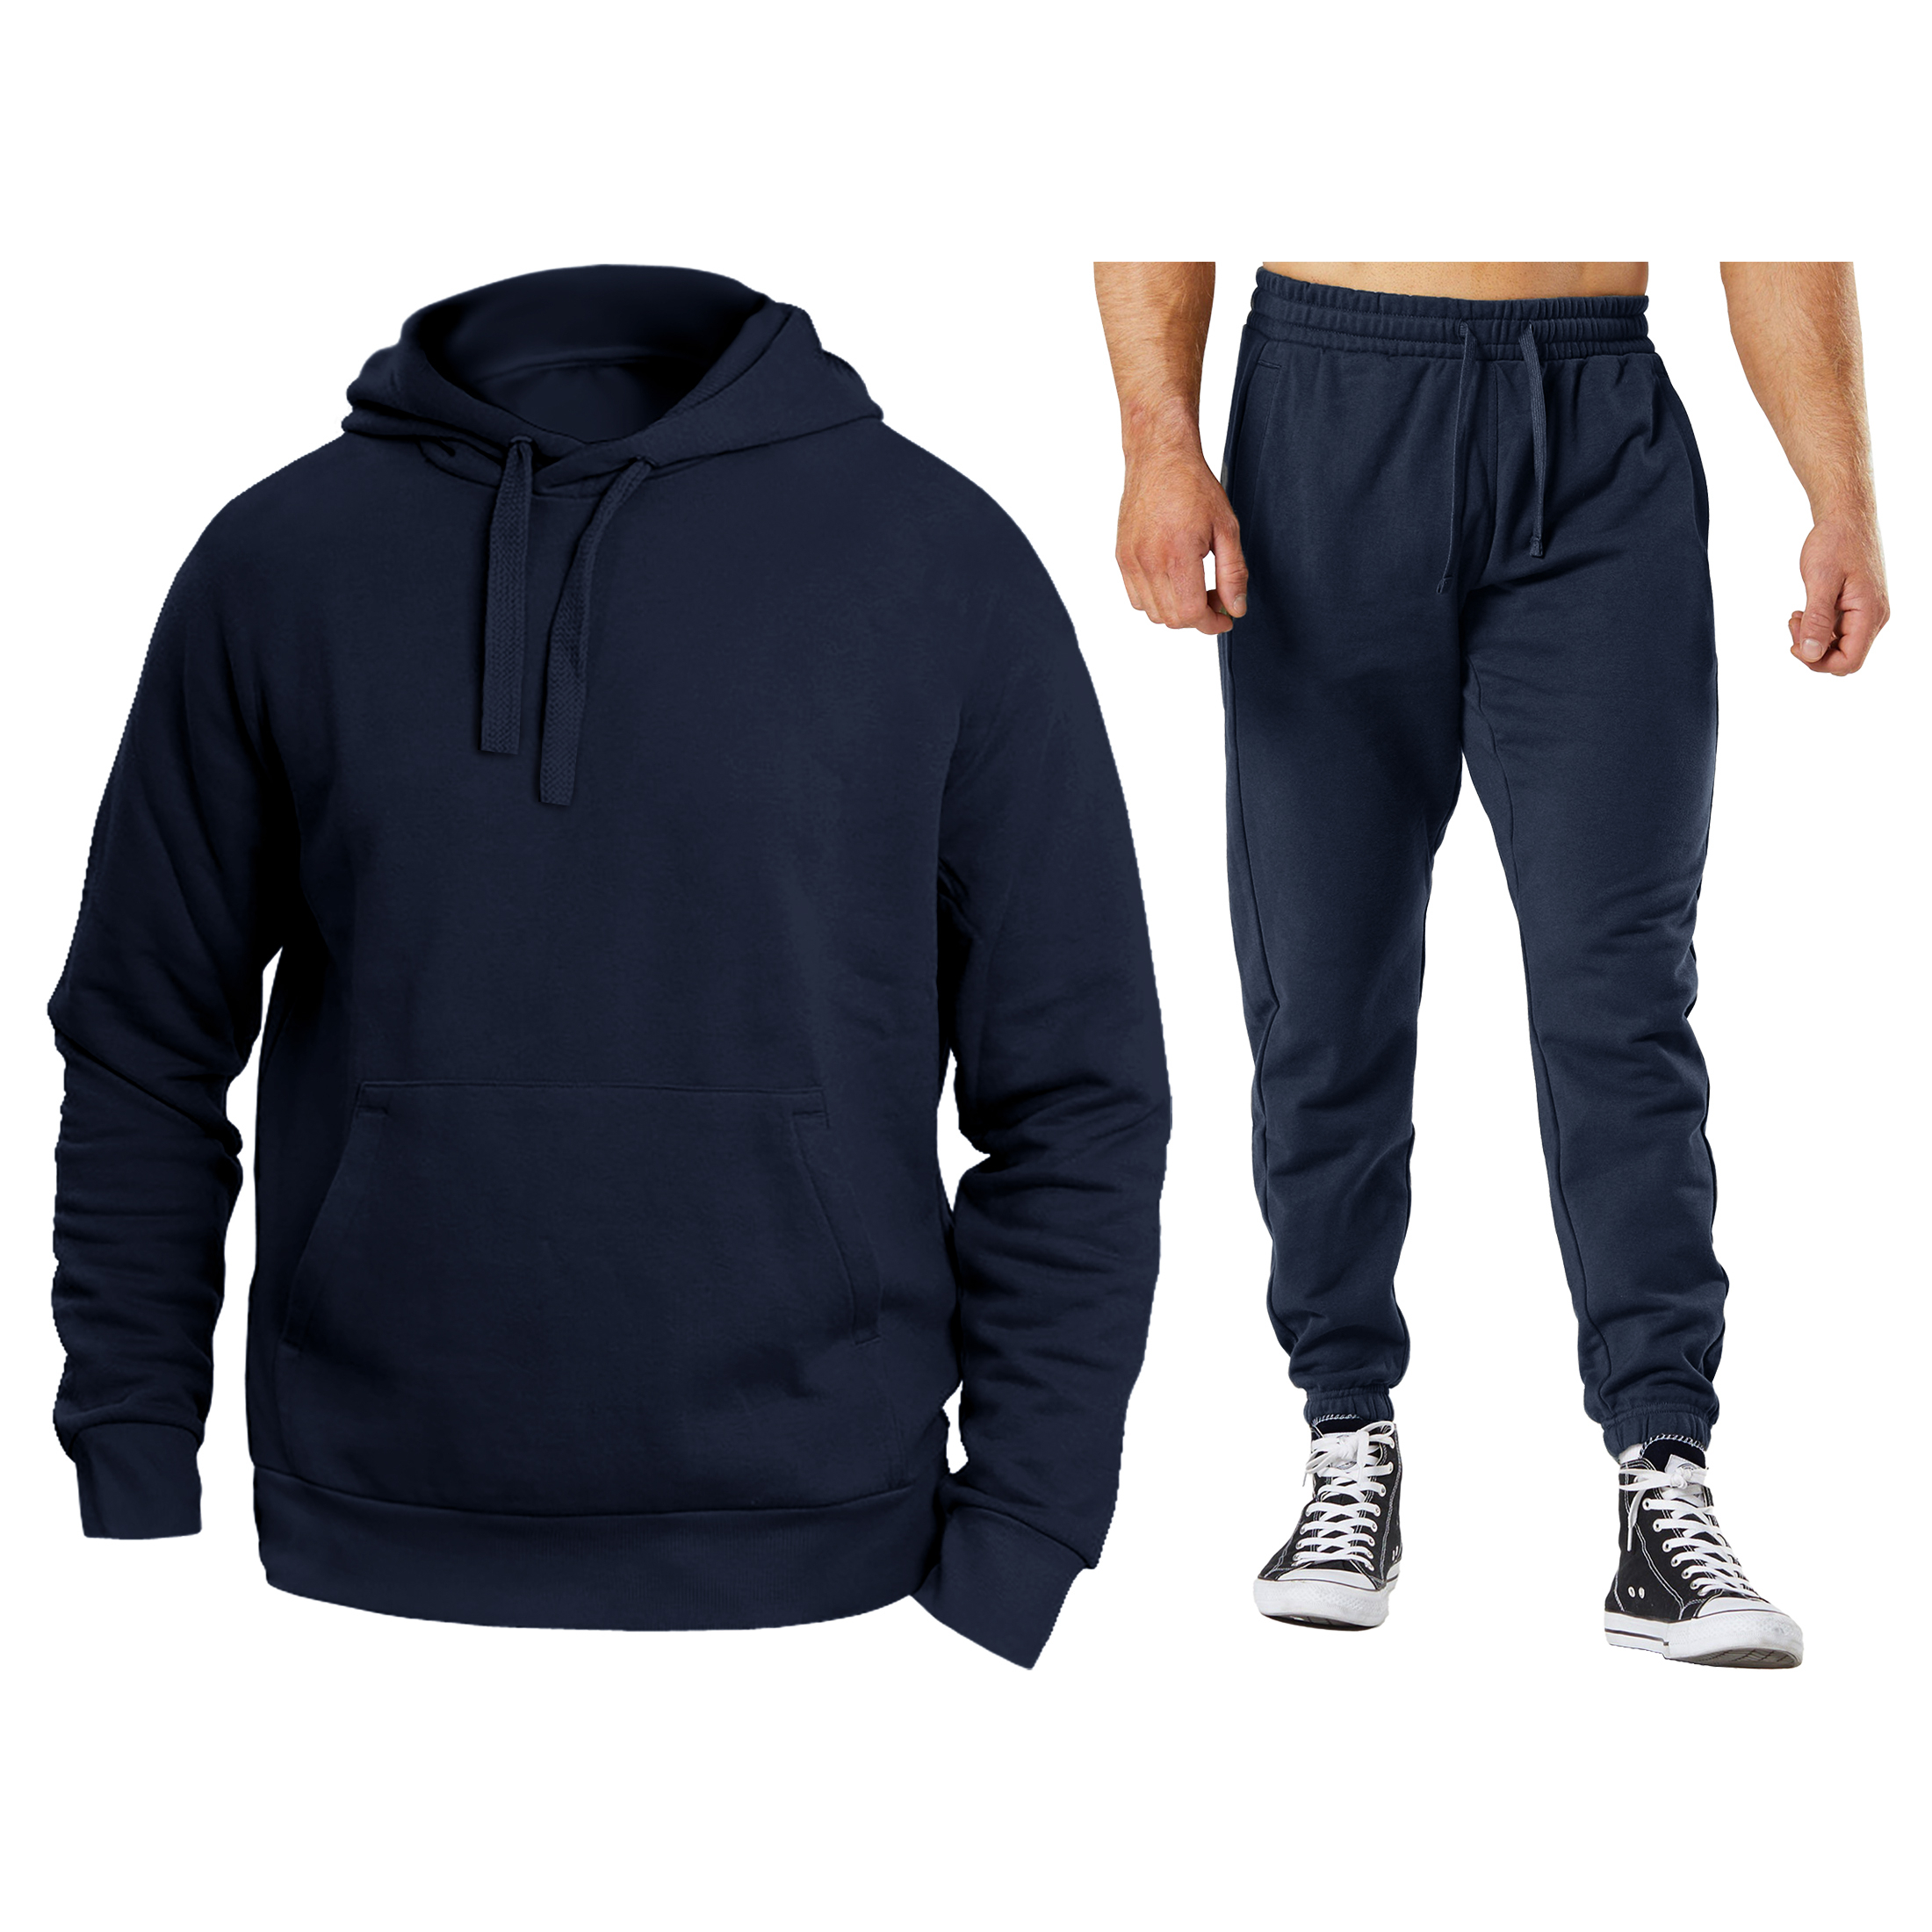 Men's Athletic Warm Jogging Pullover Active Sweatsuit - Charcoal, Medium